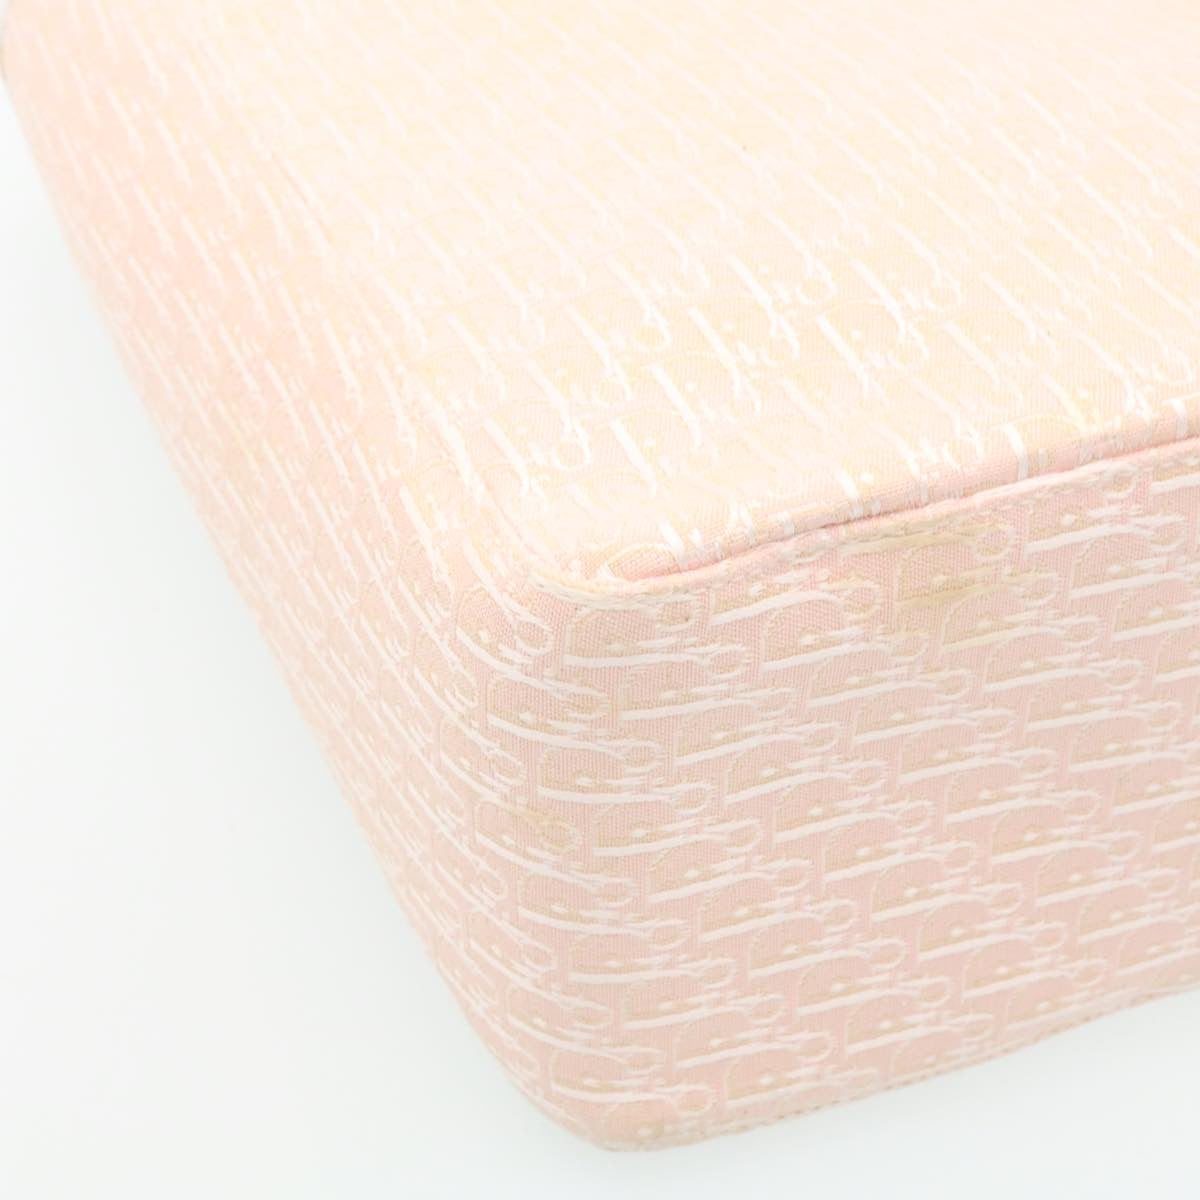 Christian Dior Trotter Canvas Shoulder Bag Canvas Pink Auth 27930